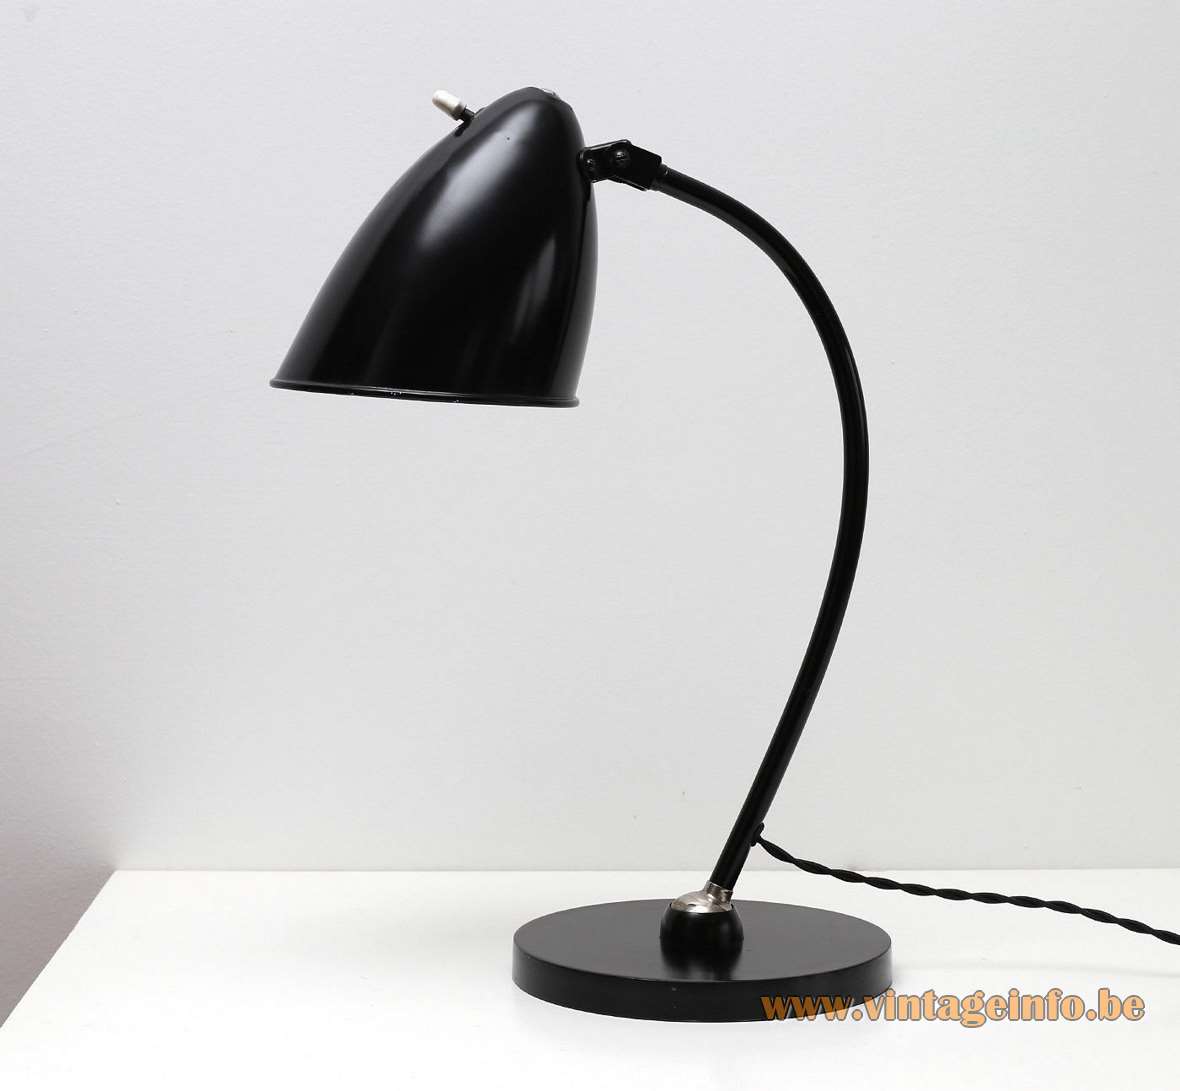 Hala Hannover desk lamp 1464 black round base curved rod bell shape lampshade 1930s 1940s Bauhaus